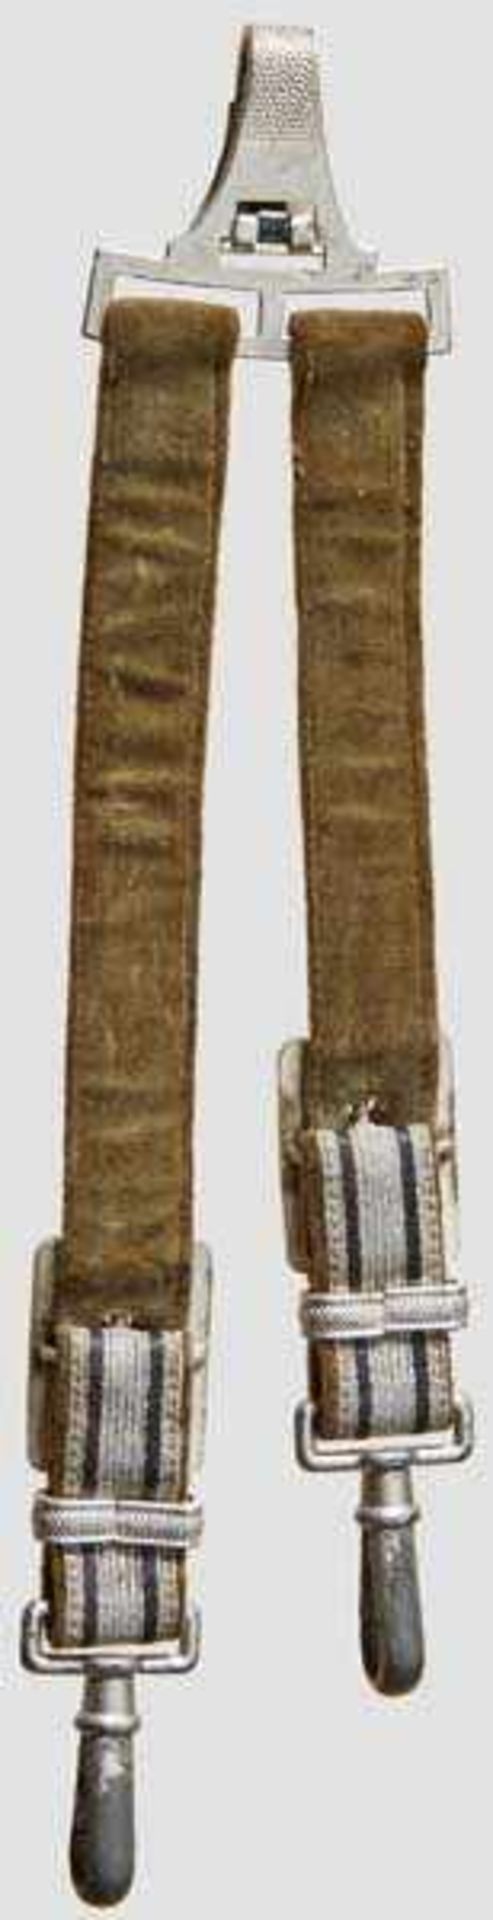 A Pair of Social Welfare Leader's Dagger Hangers Gray velvet-backed woven gray fabric interwoven - Bild 2 aus 2